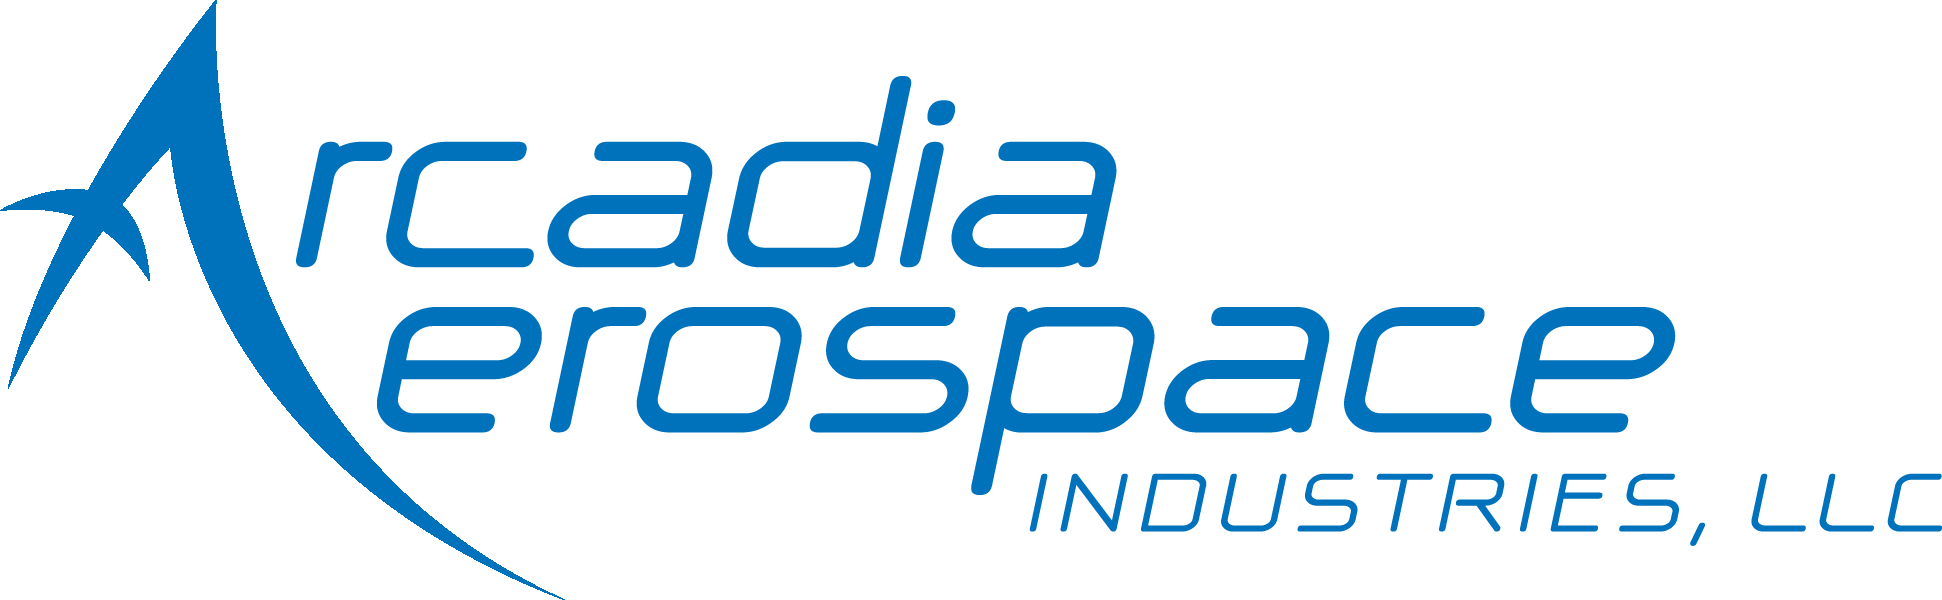 Arcadia Aerospace Industries, LLC logo.